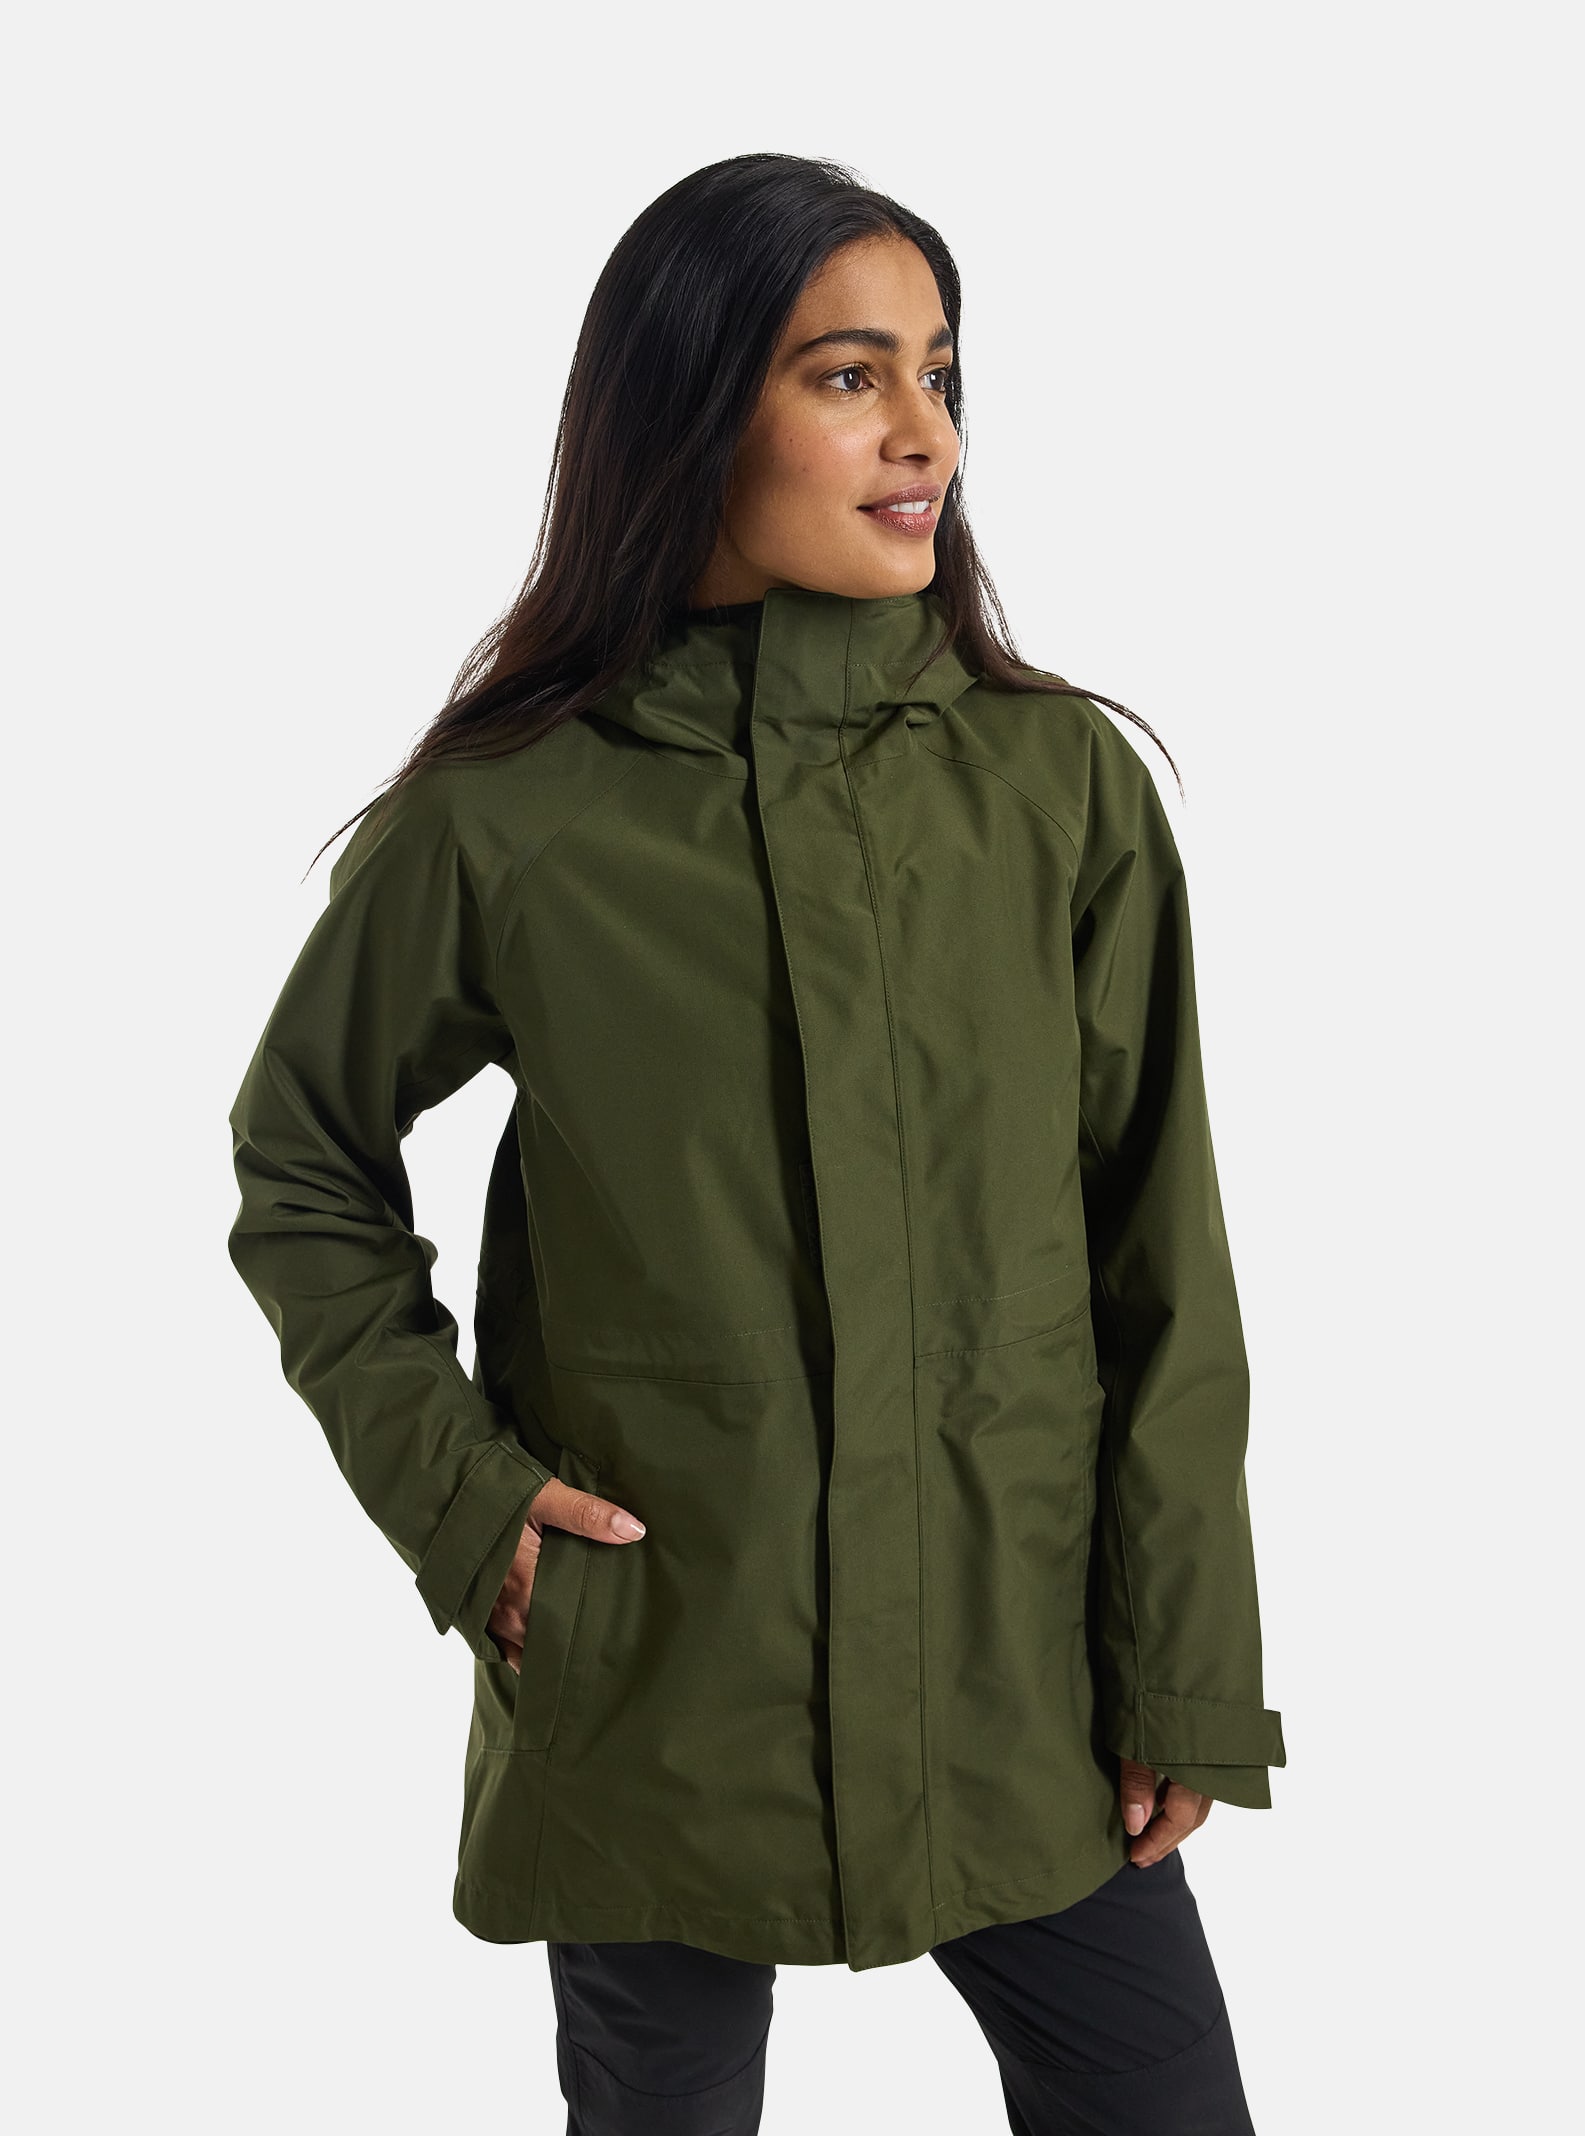 Women's Rain Jackets and Coats | Burton.com NZ